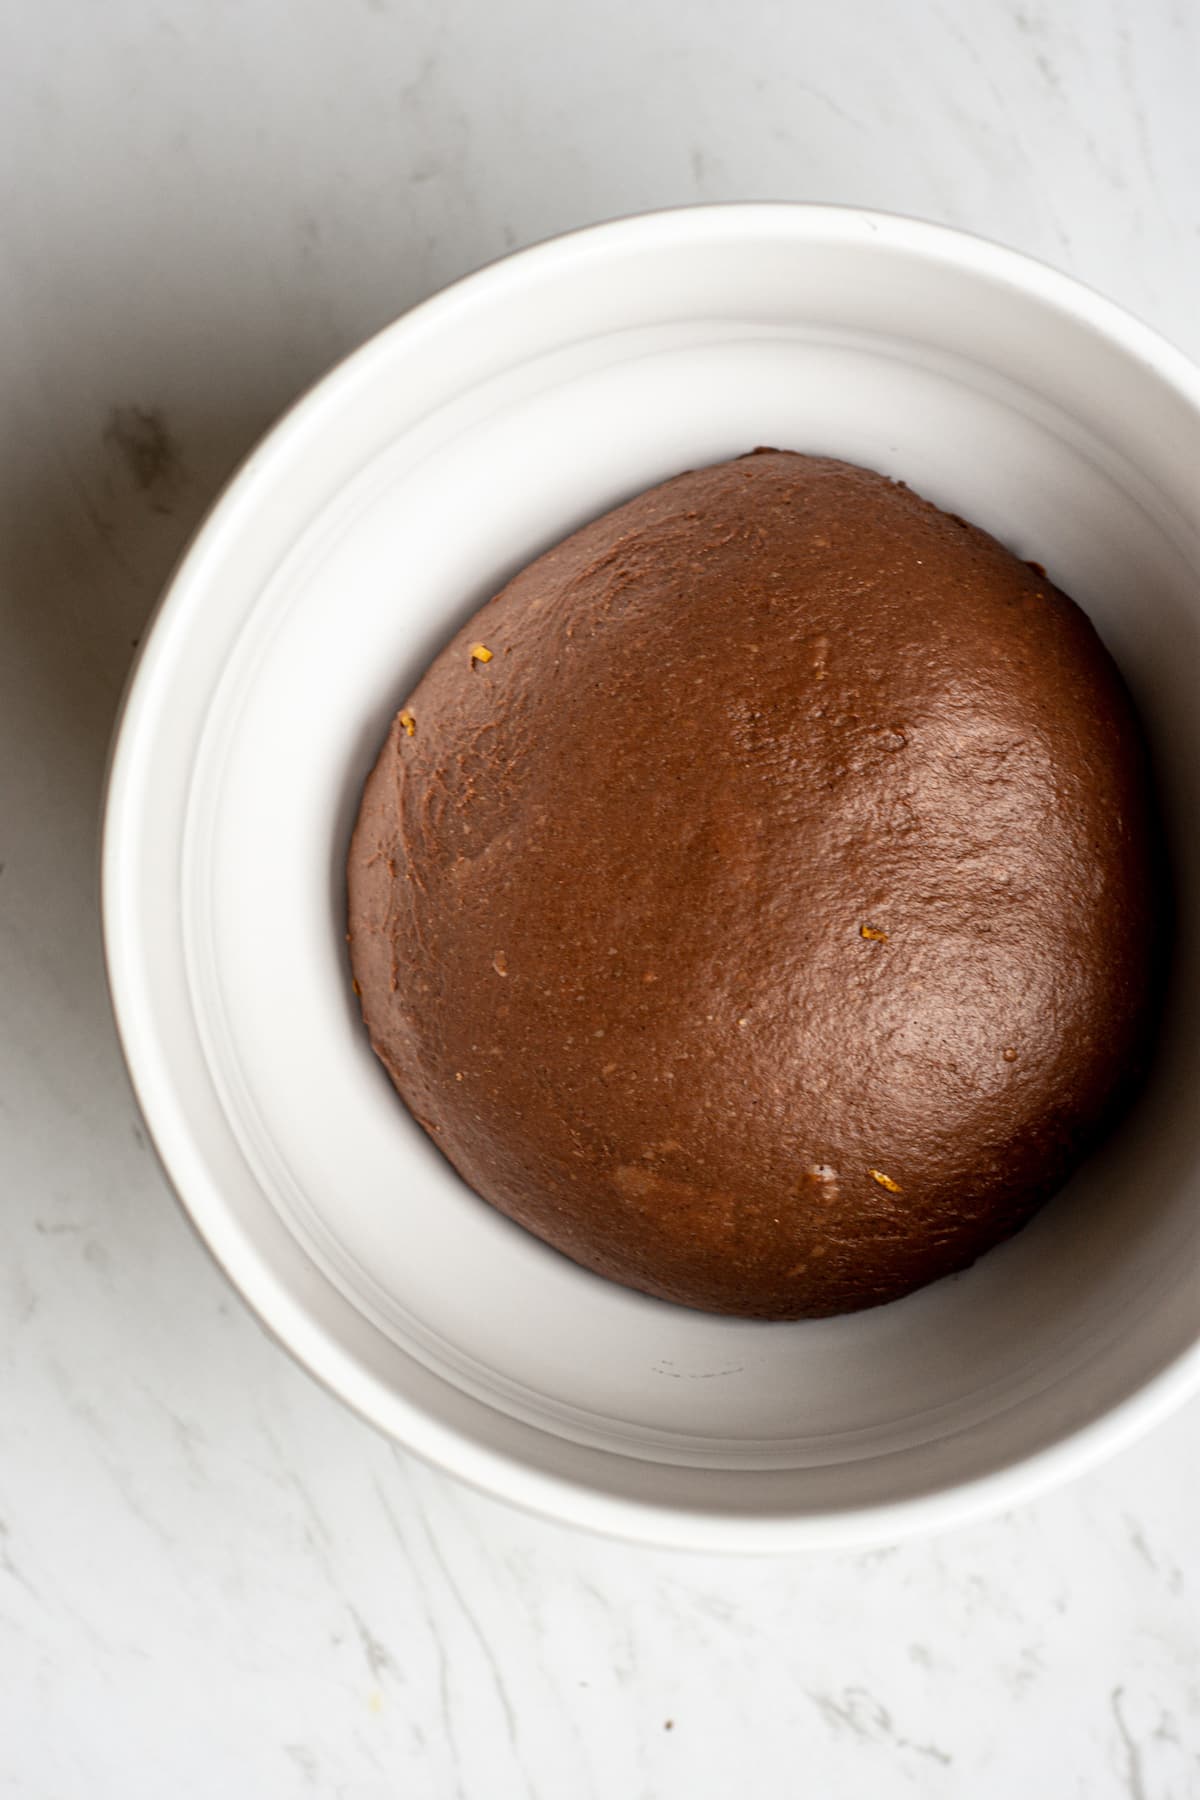 a bowl of chocolate bread dough